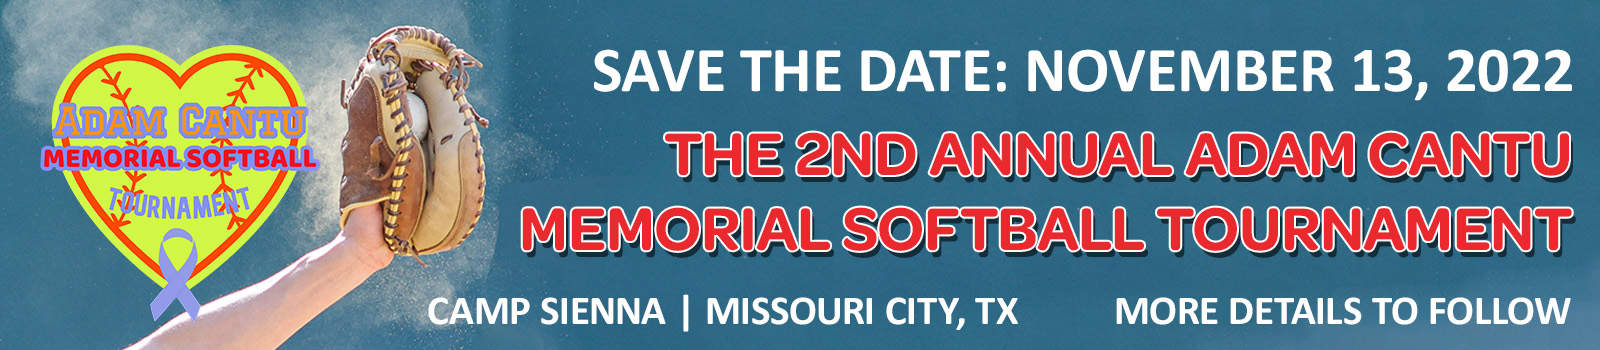 2nd annual Adam cantu memorial softball tournament